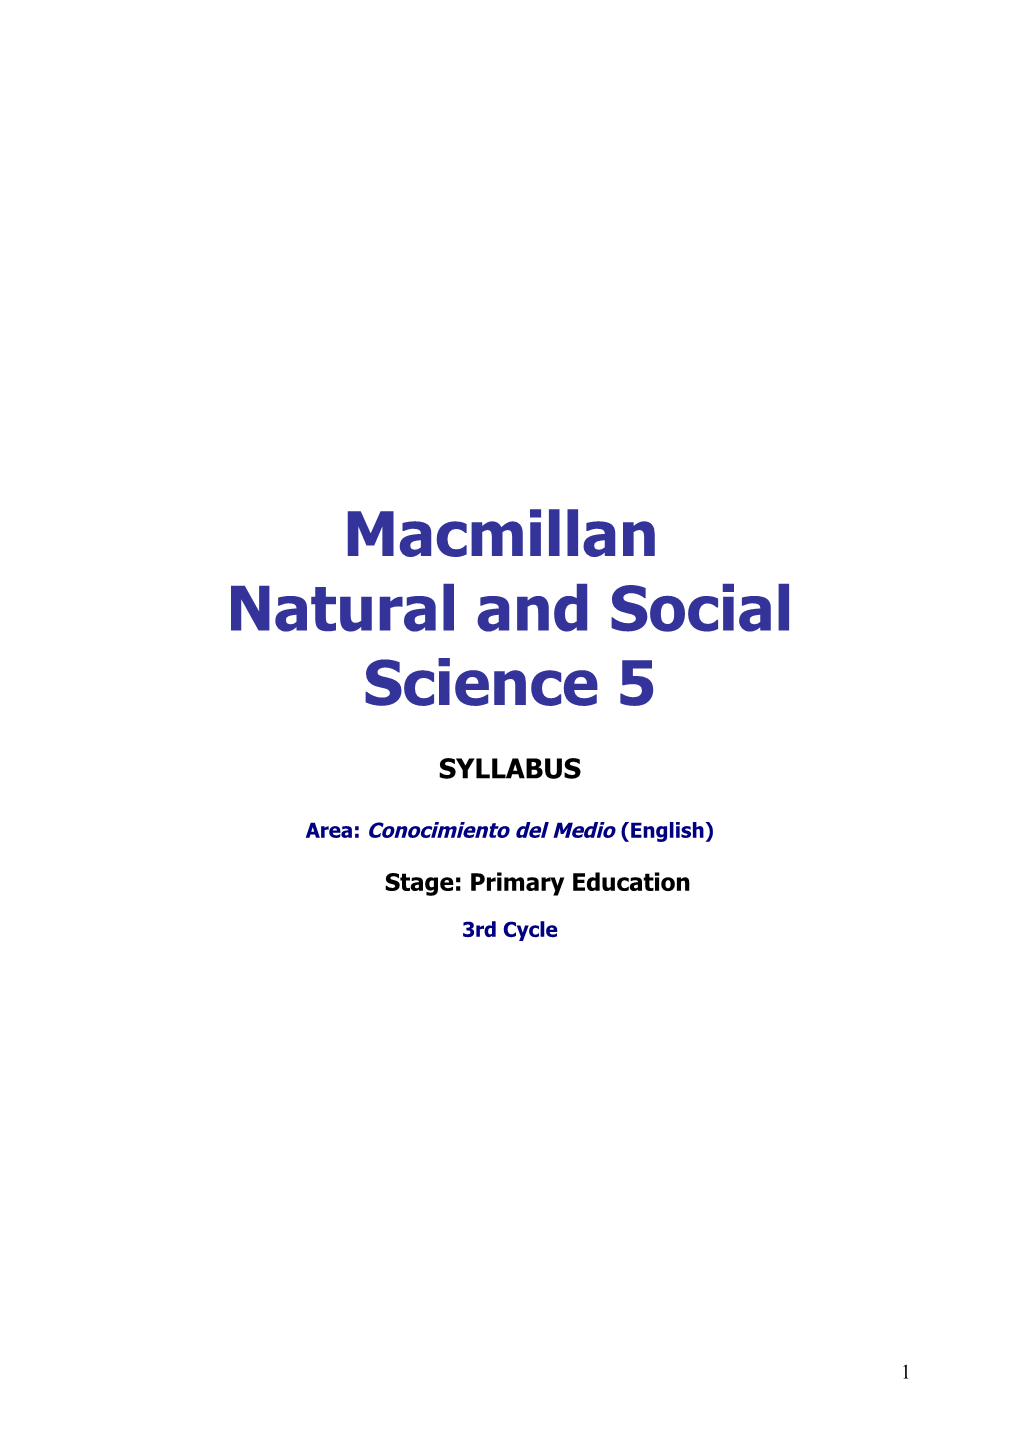 Natural and Social Science 5